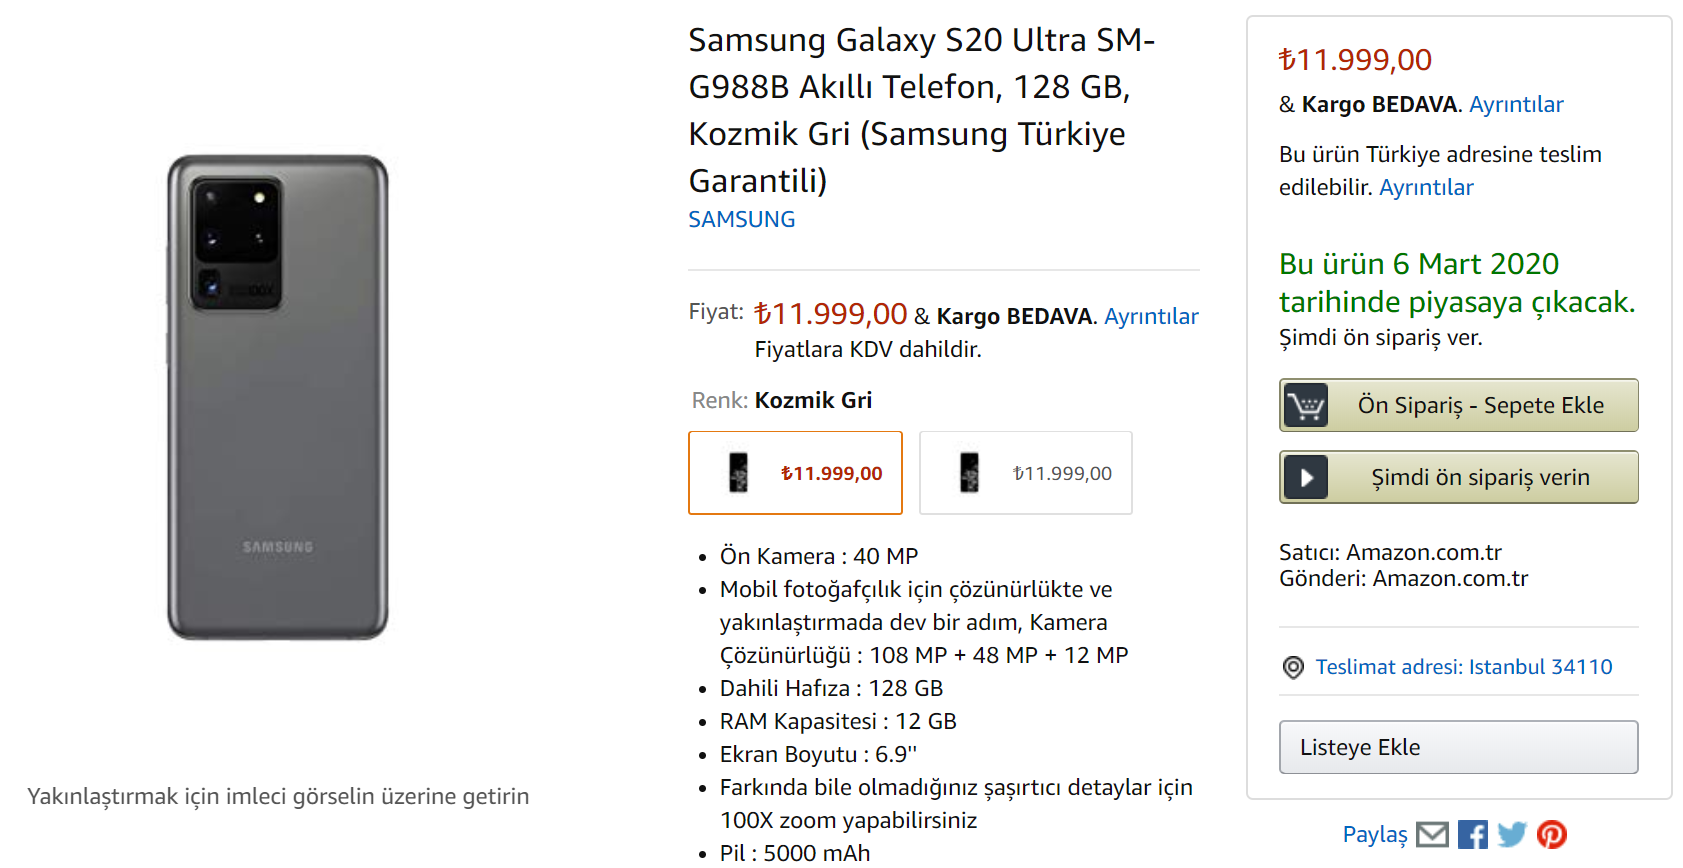 Samsung Galaxy S20 serisi Amazon'da ön siparişe sunuldu